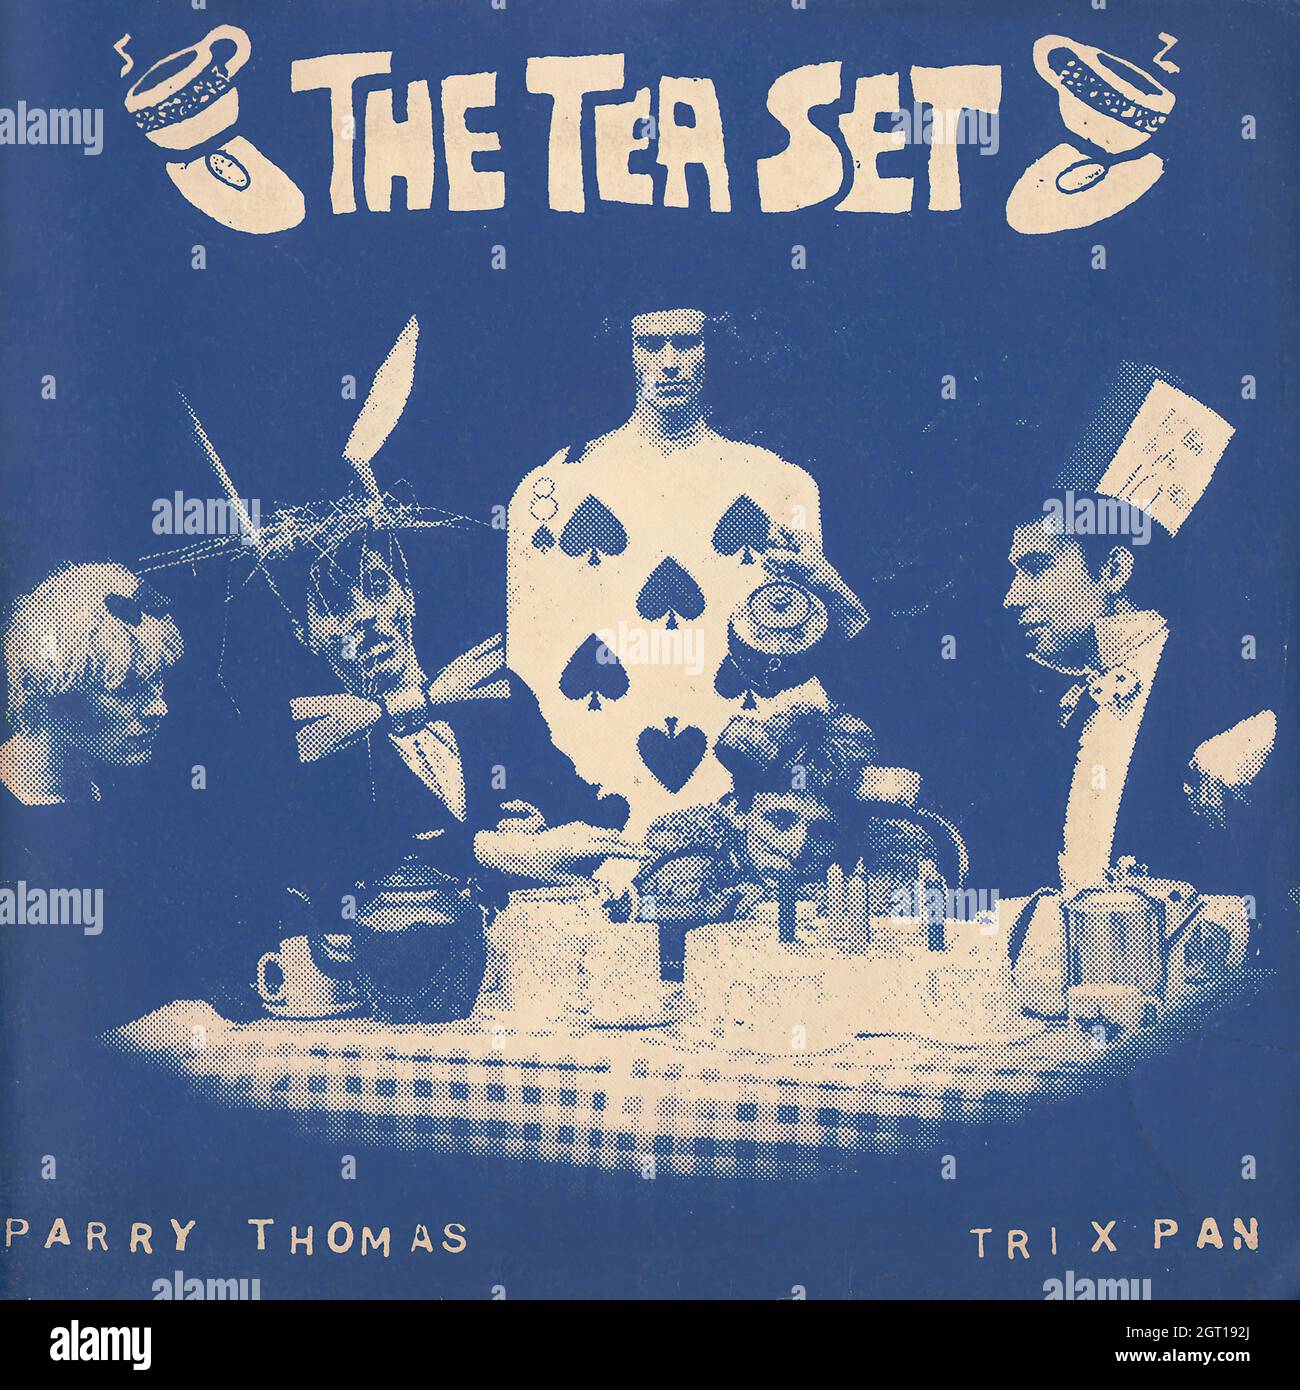 The Tea Set - Parry Thomas - Tri X Pan 45rpm - Vintage Vinyl Record Cover Stock Photo